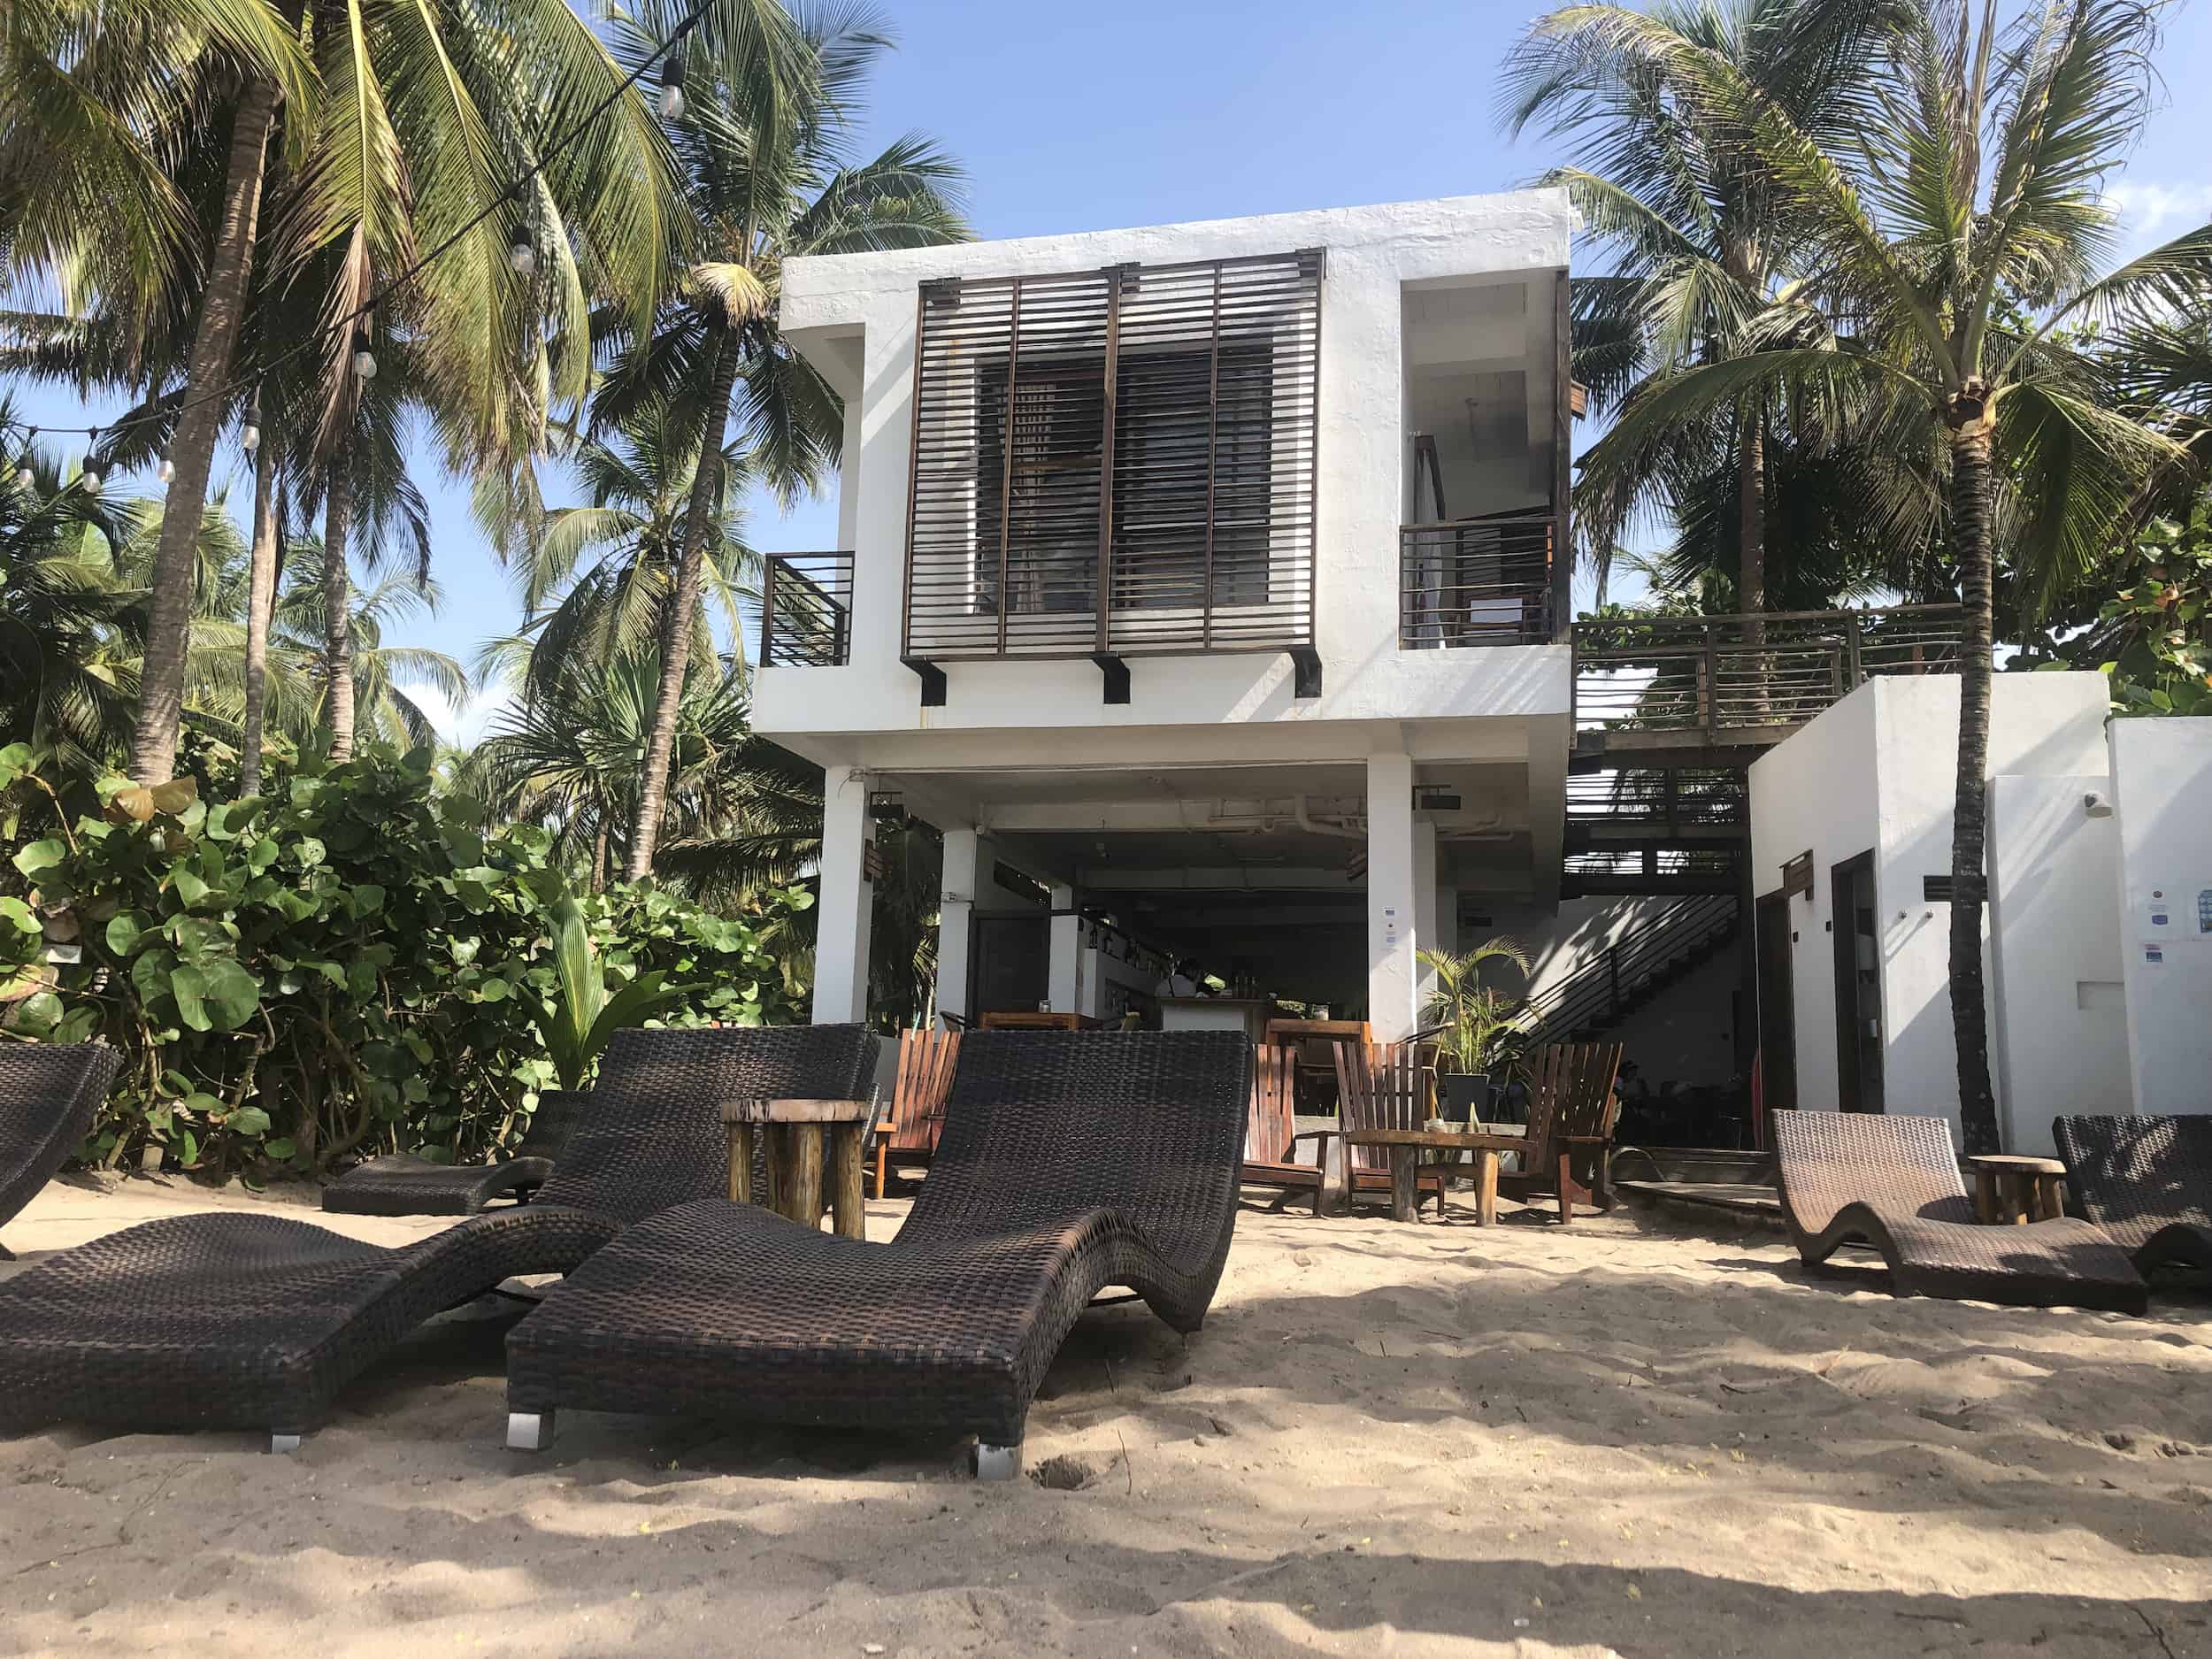 Makao Beach Hotel in Palomino, La Guajira, Colombia